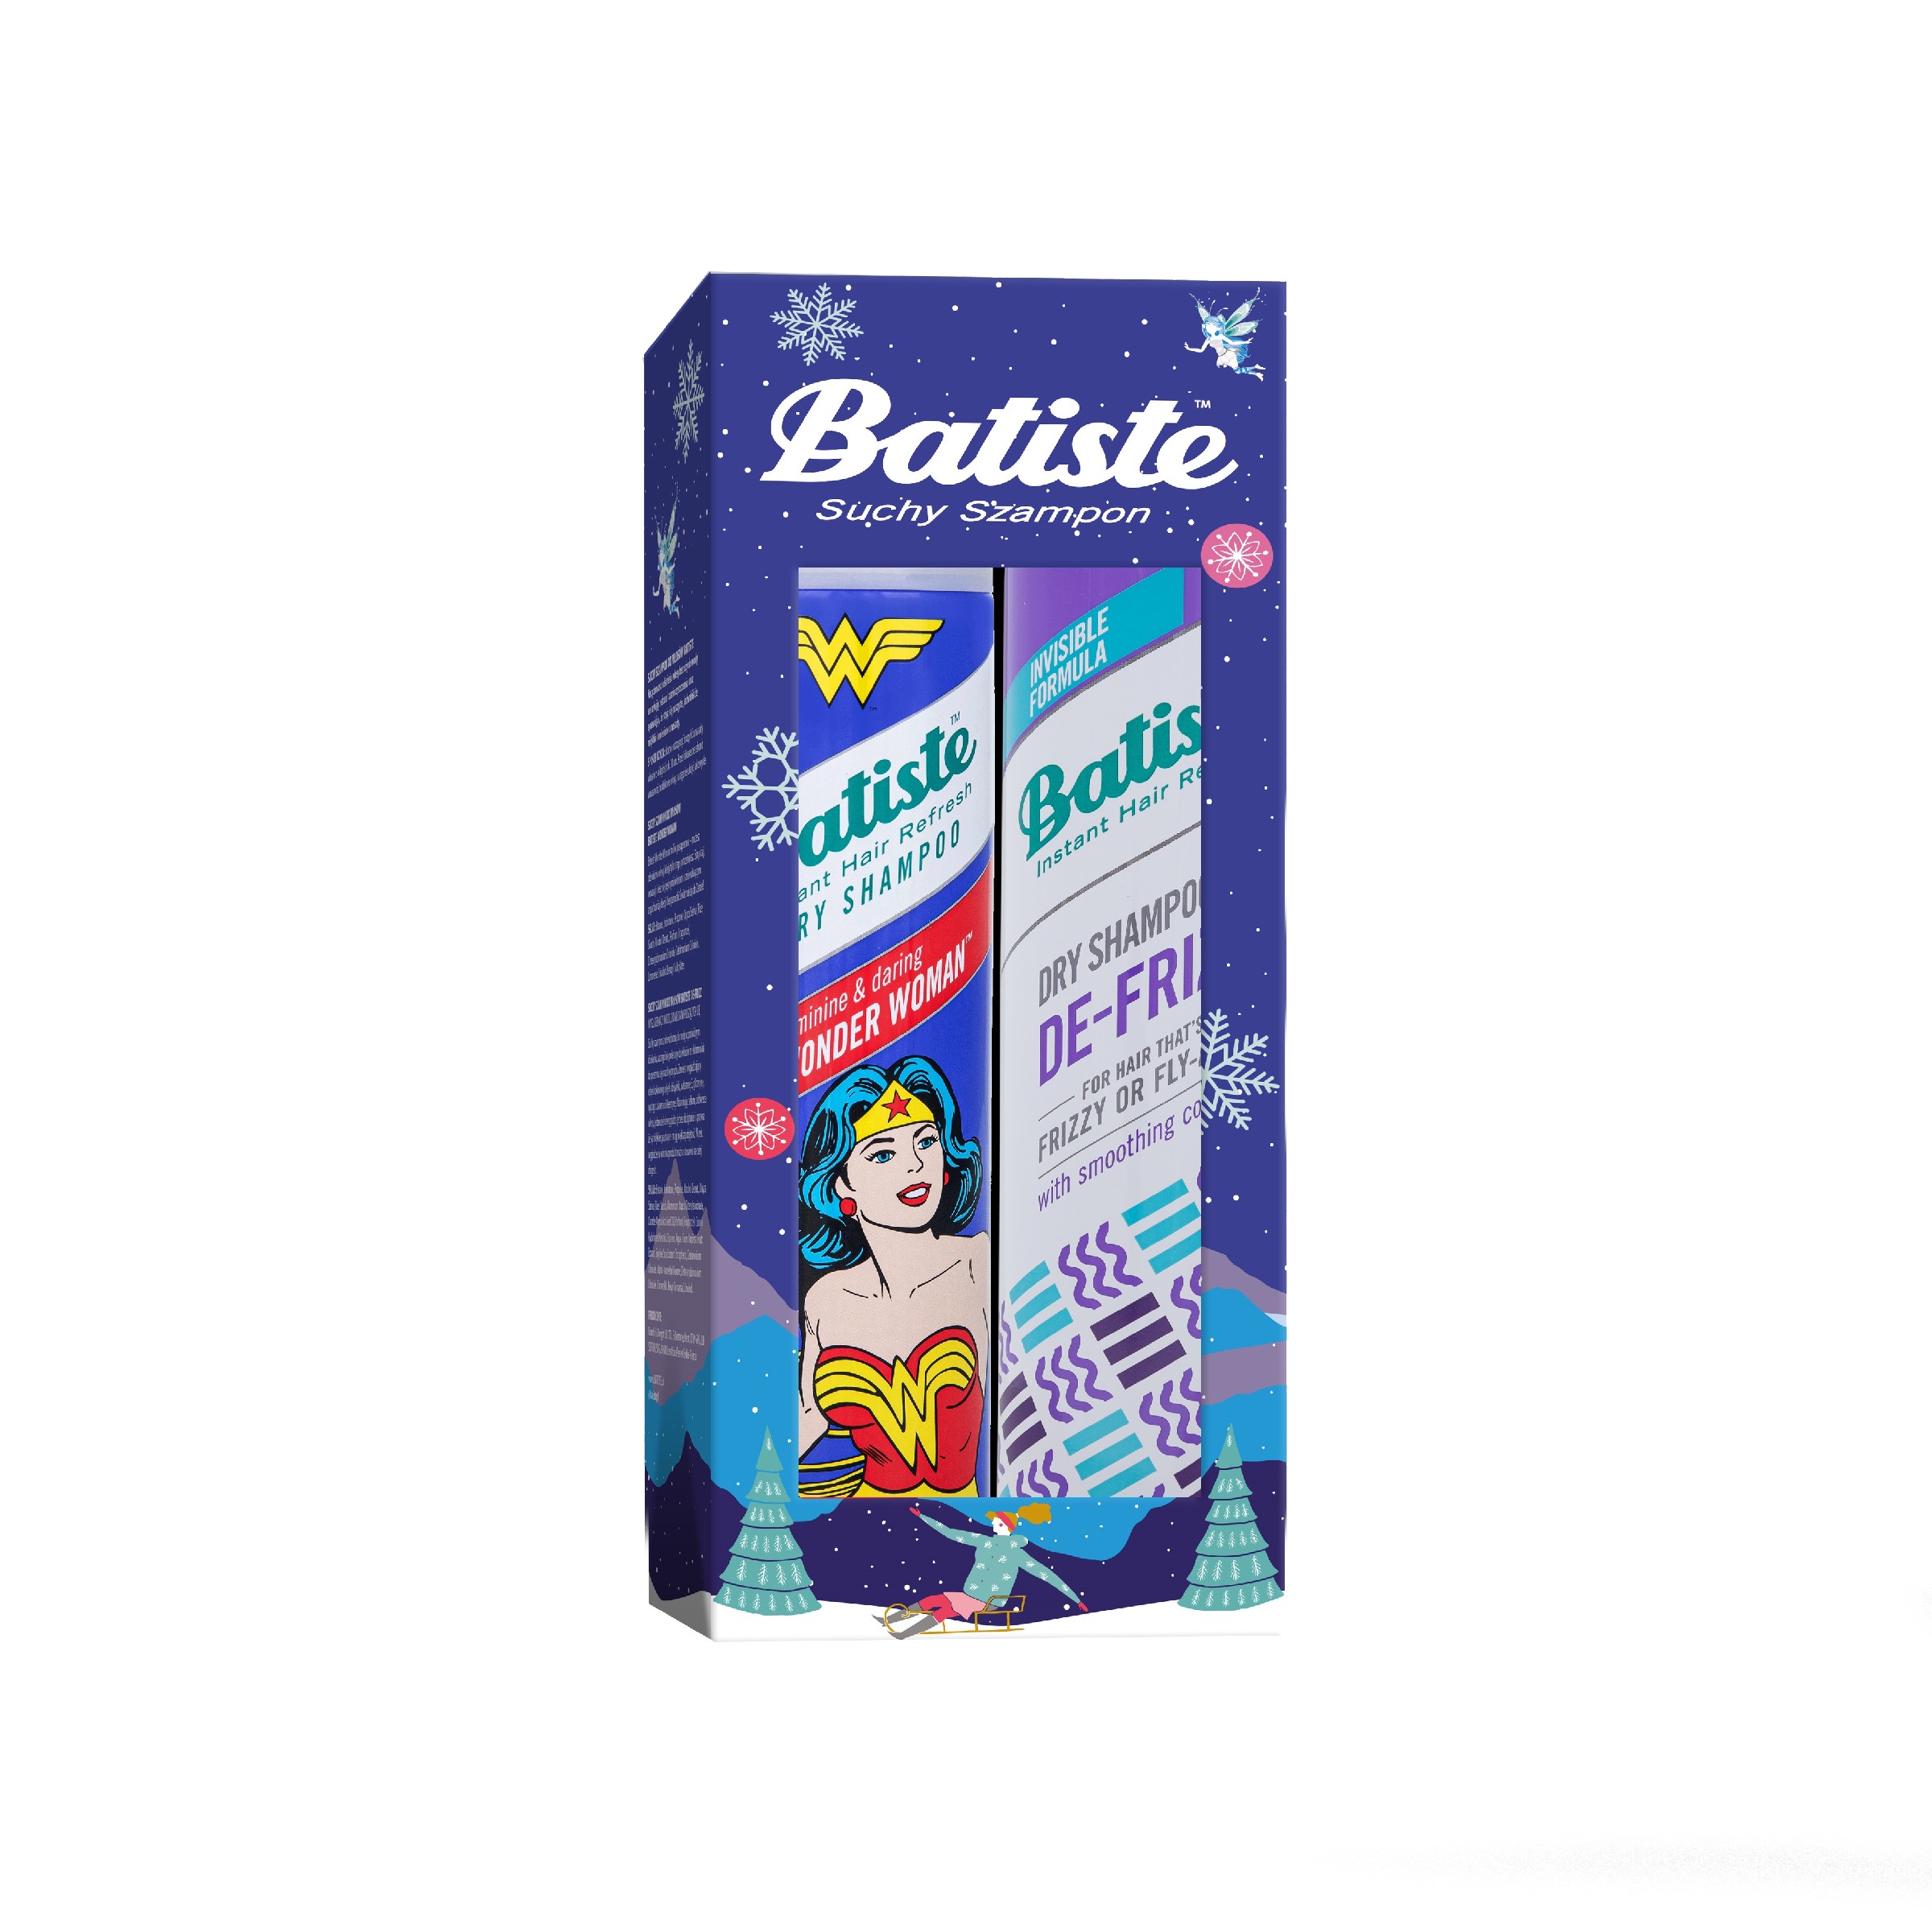 batiste suchy szampon de frizz